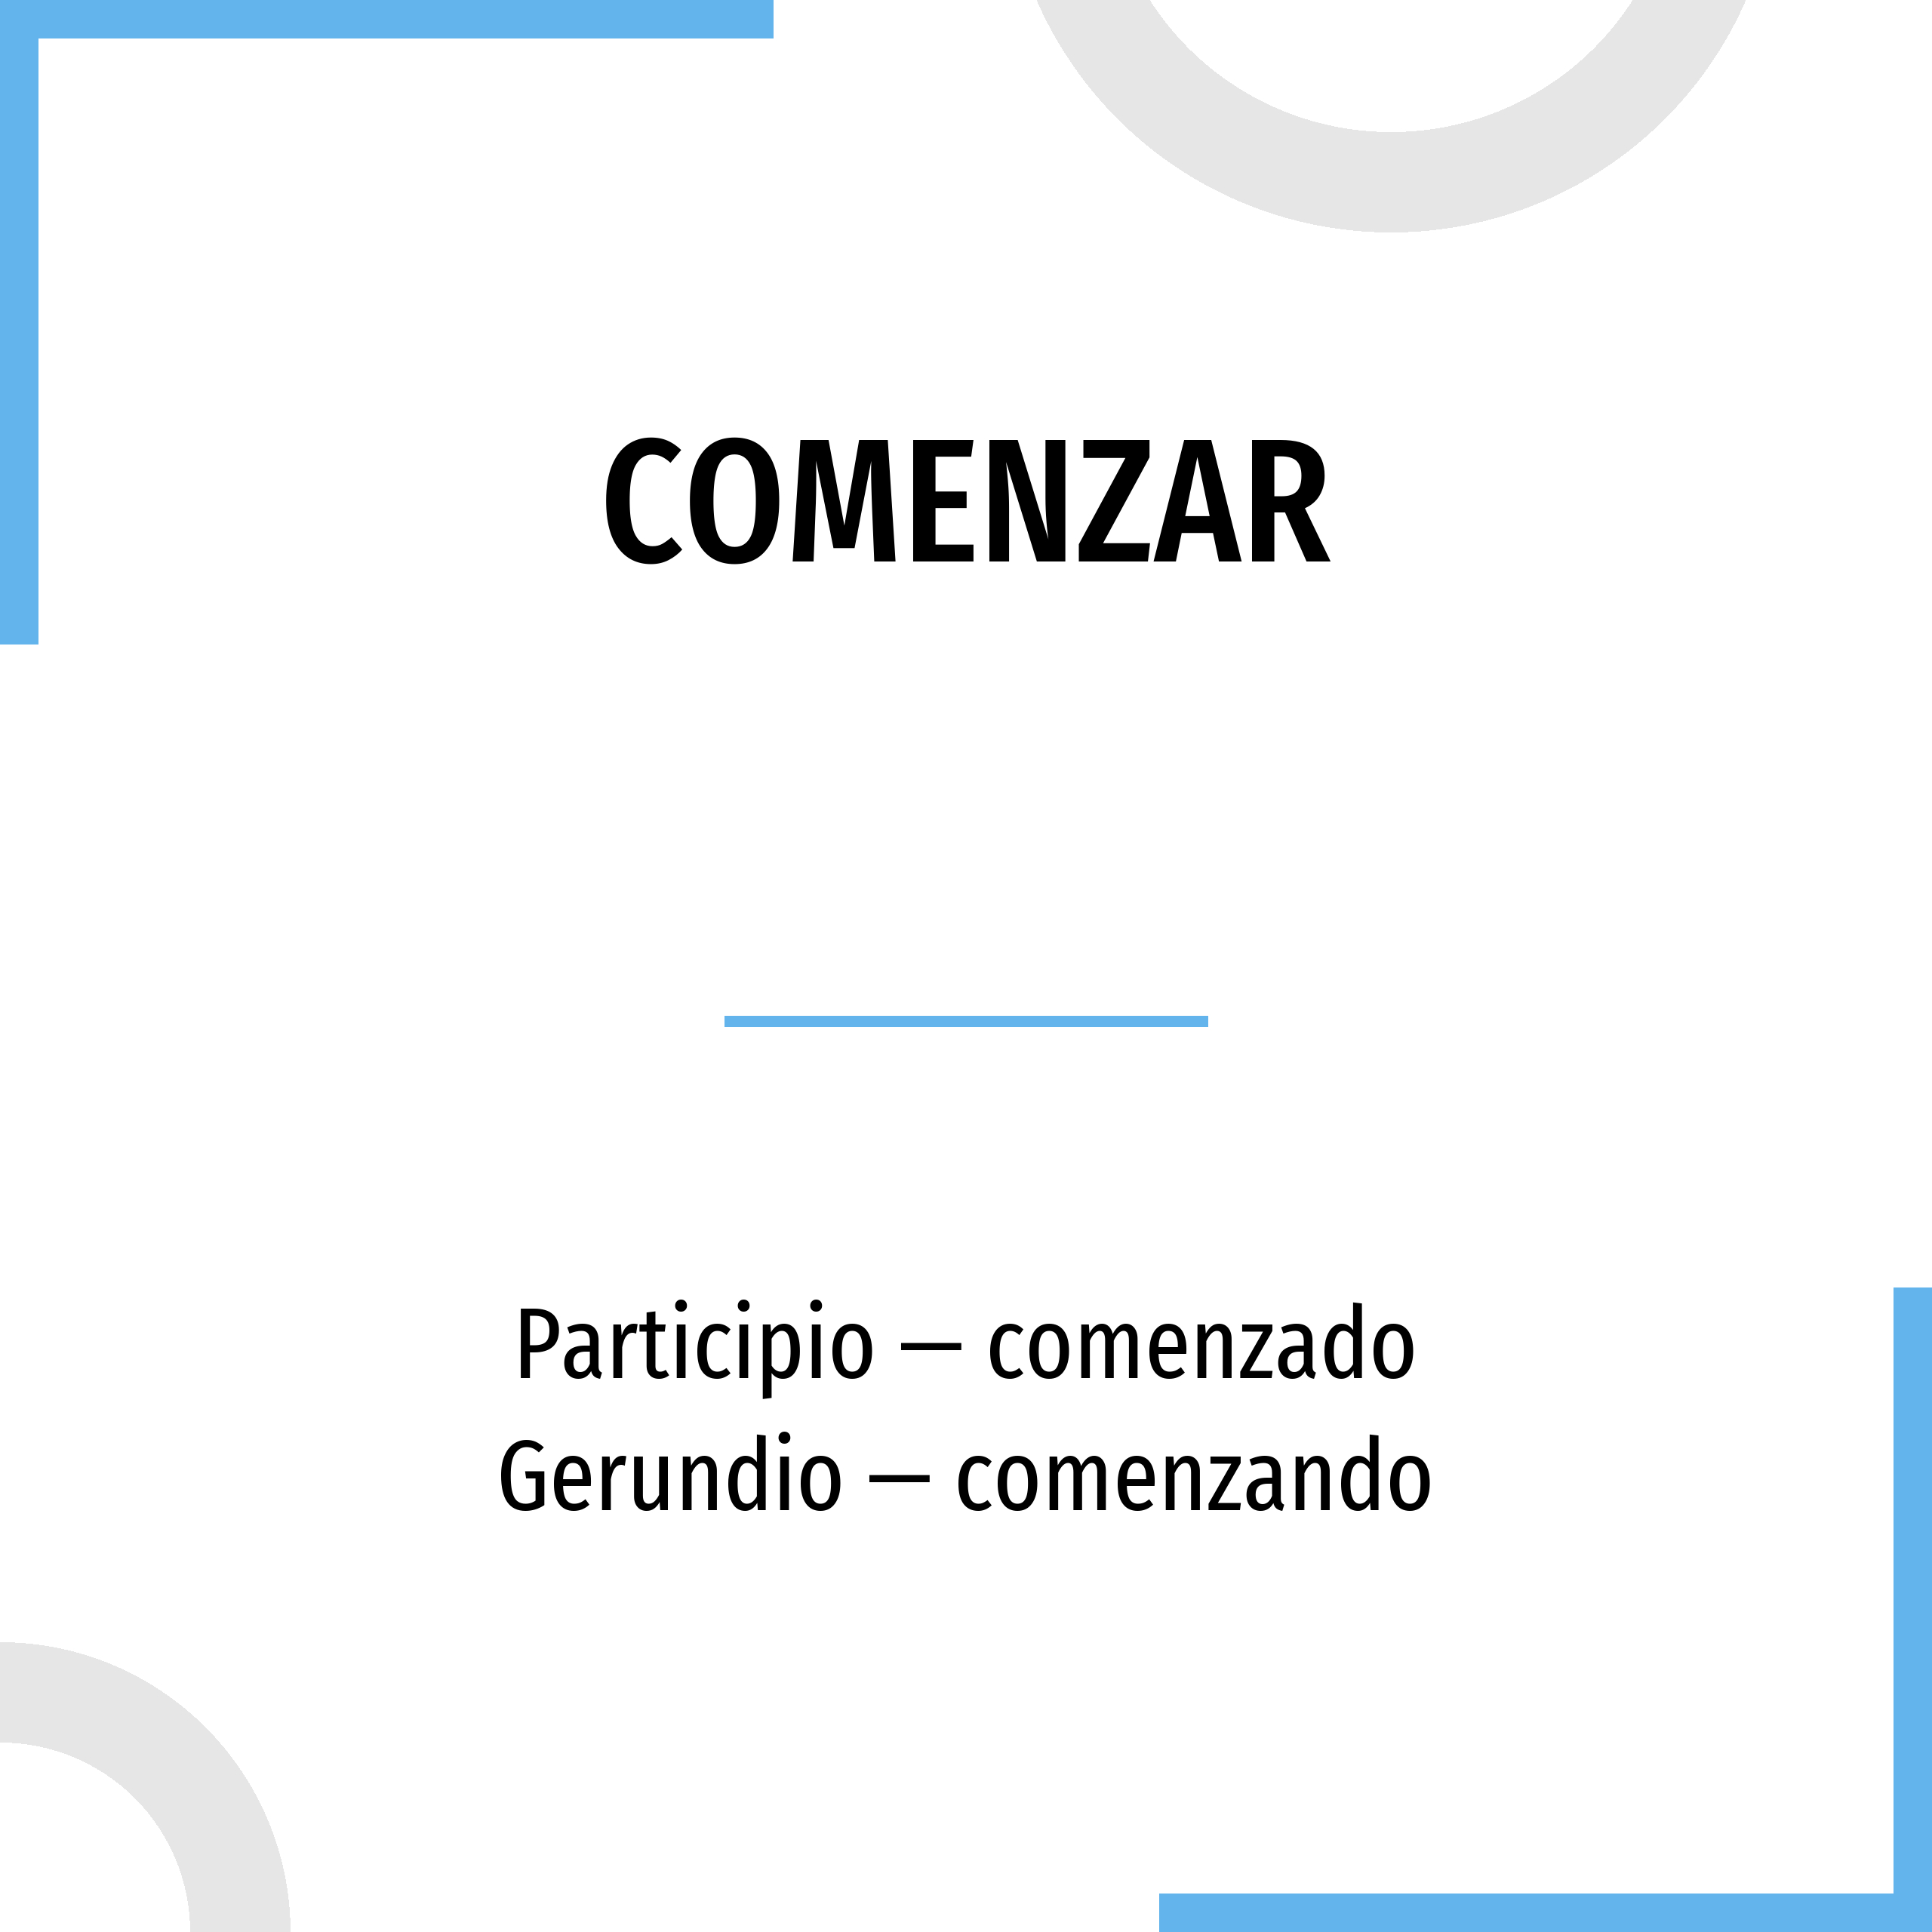 conjugation-comenzar-spanish-verb-in-all-tenses-and-forms-conjugate